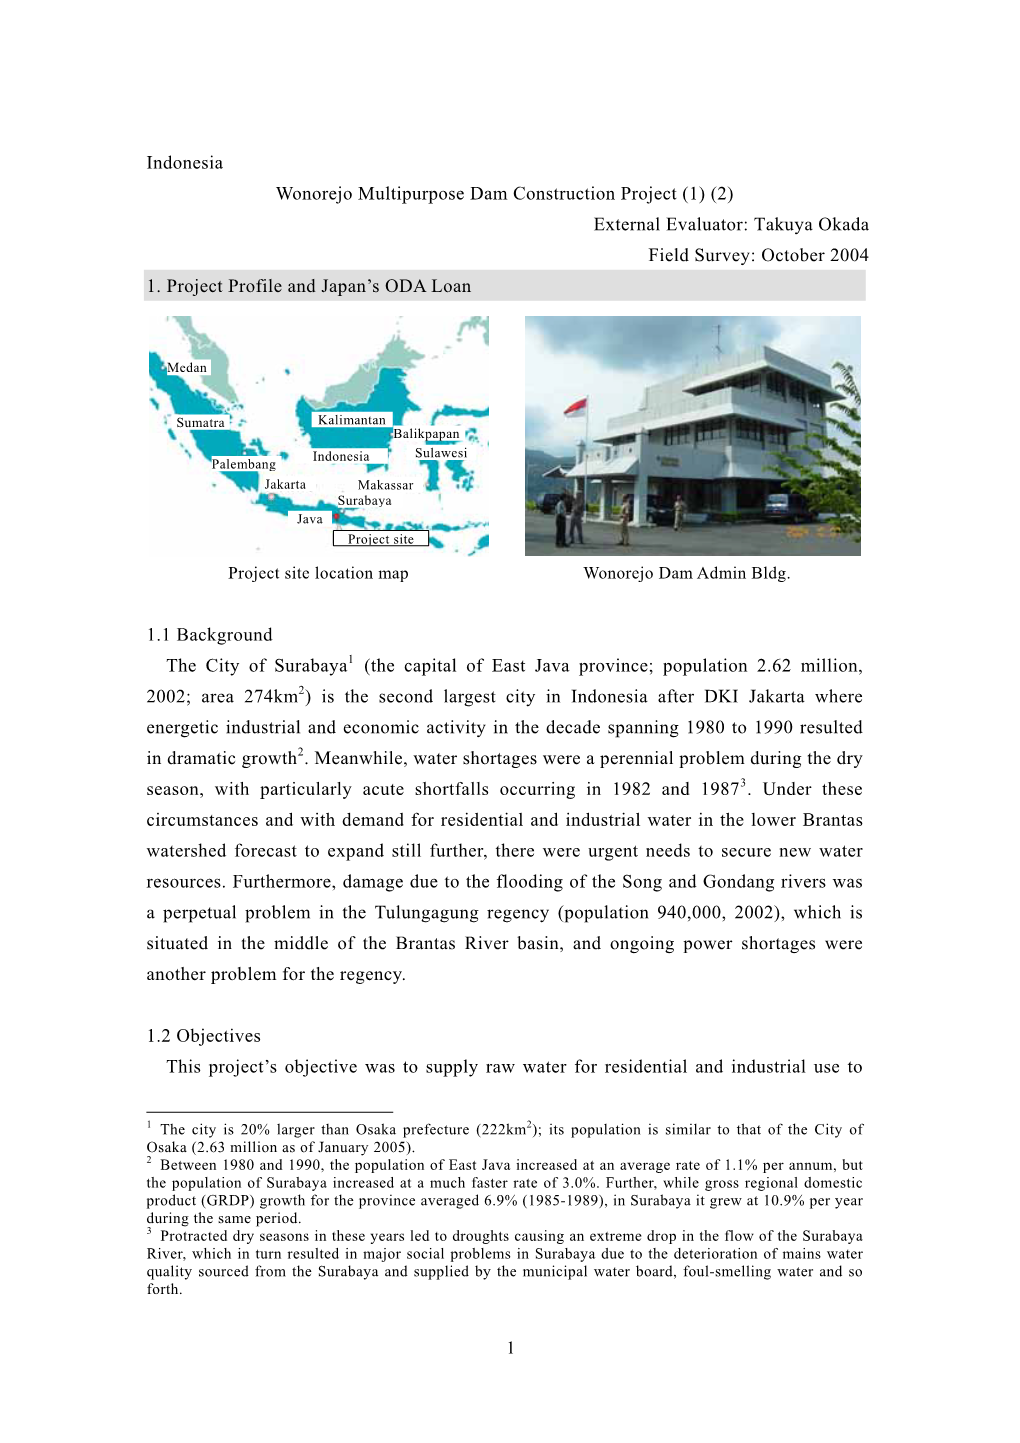 Indonesia Wonorejo Multipurpose Dam Construction Project (1) (2) External Evaluator: Takuya Okada Field Survey: October 2004 1